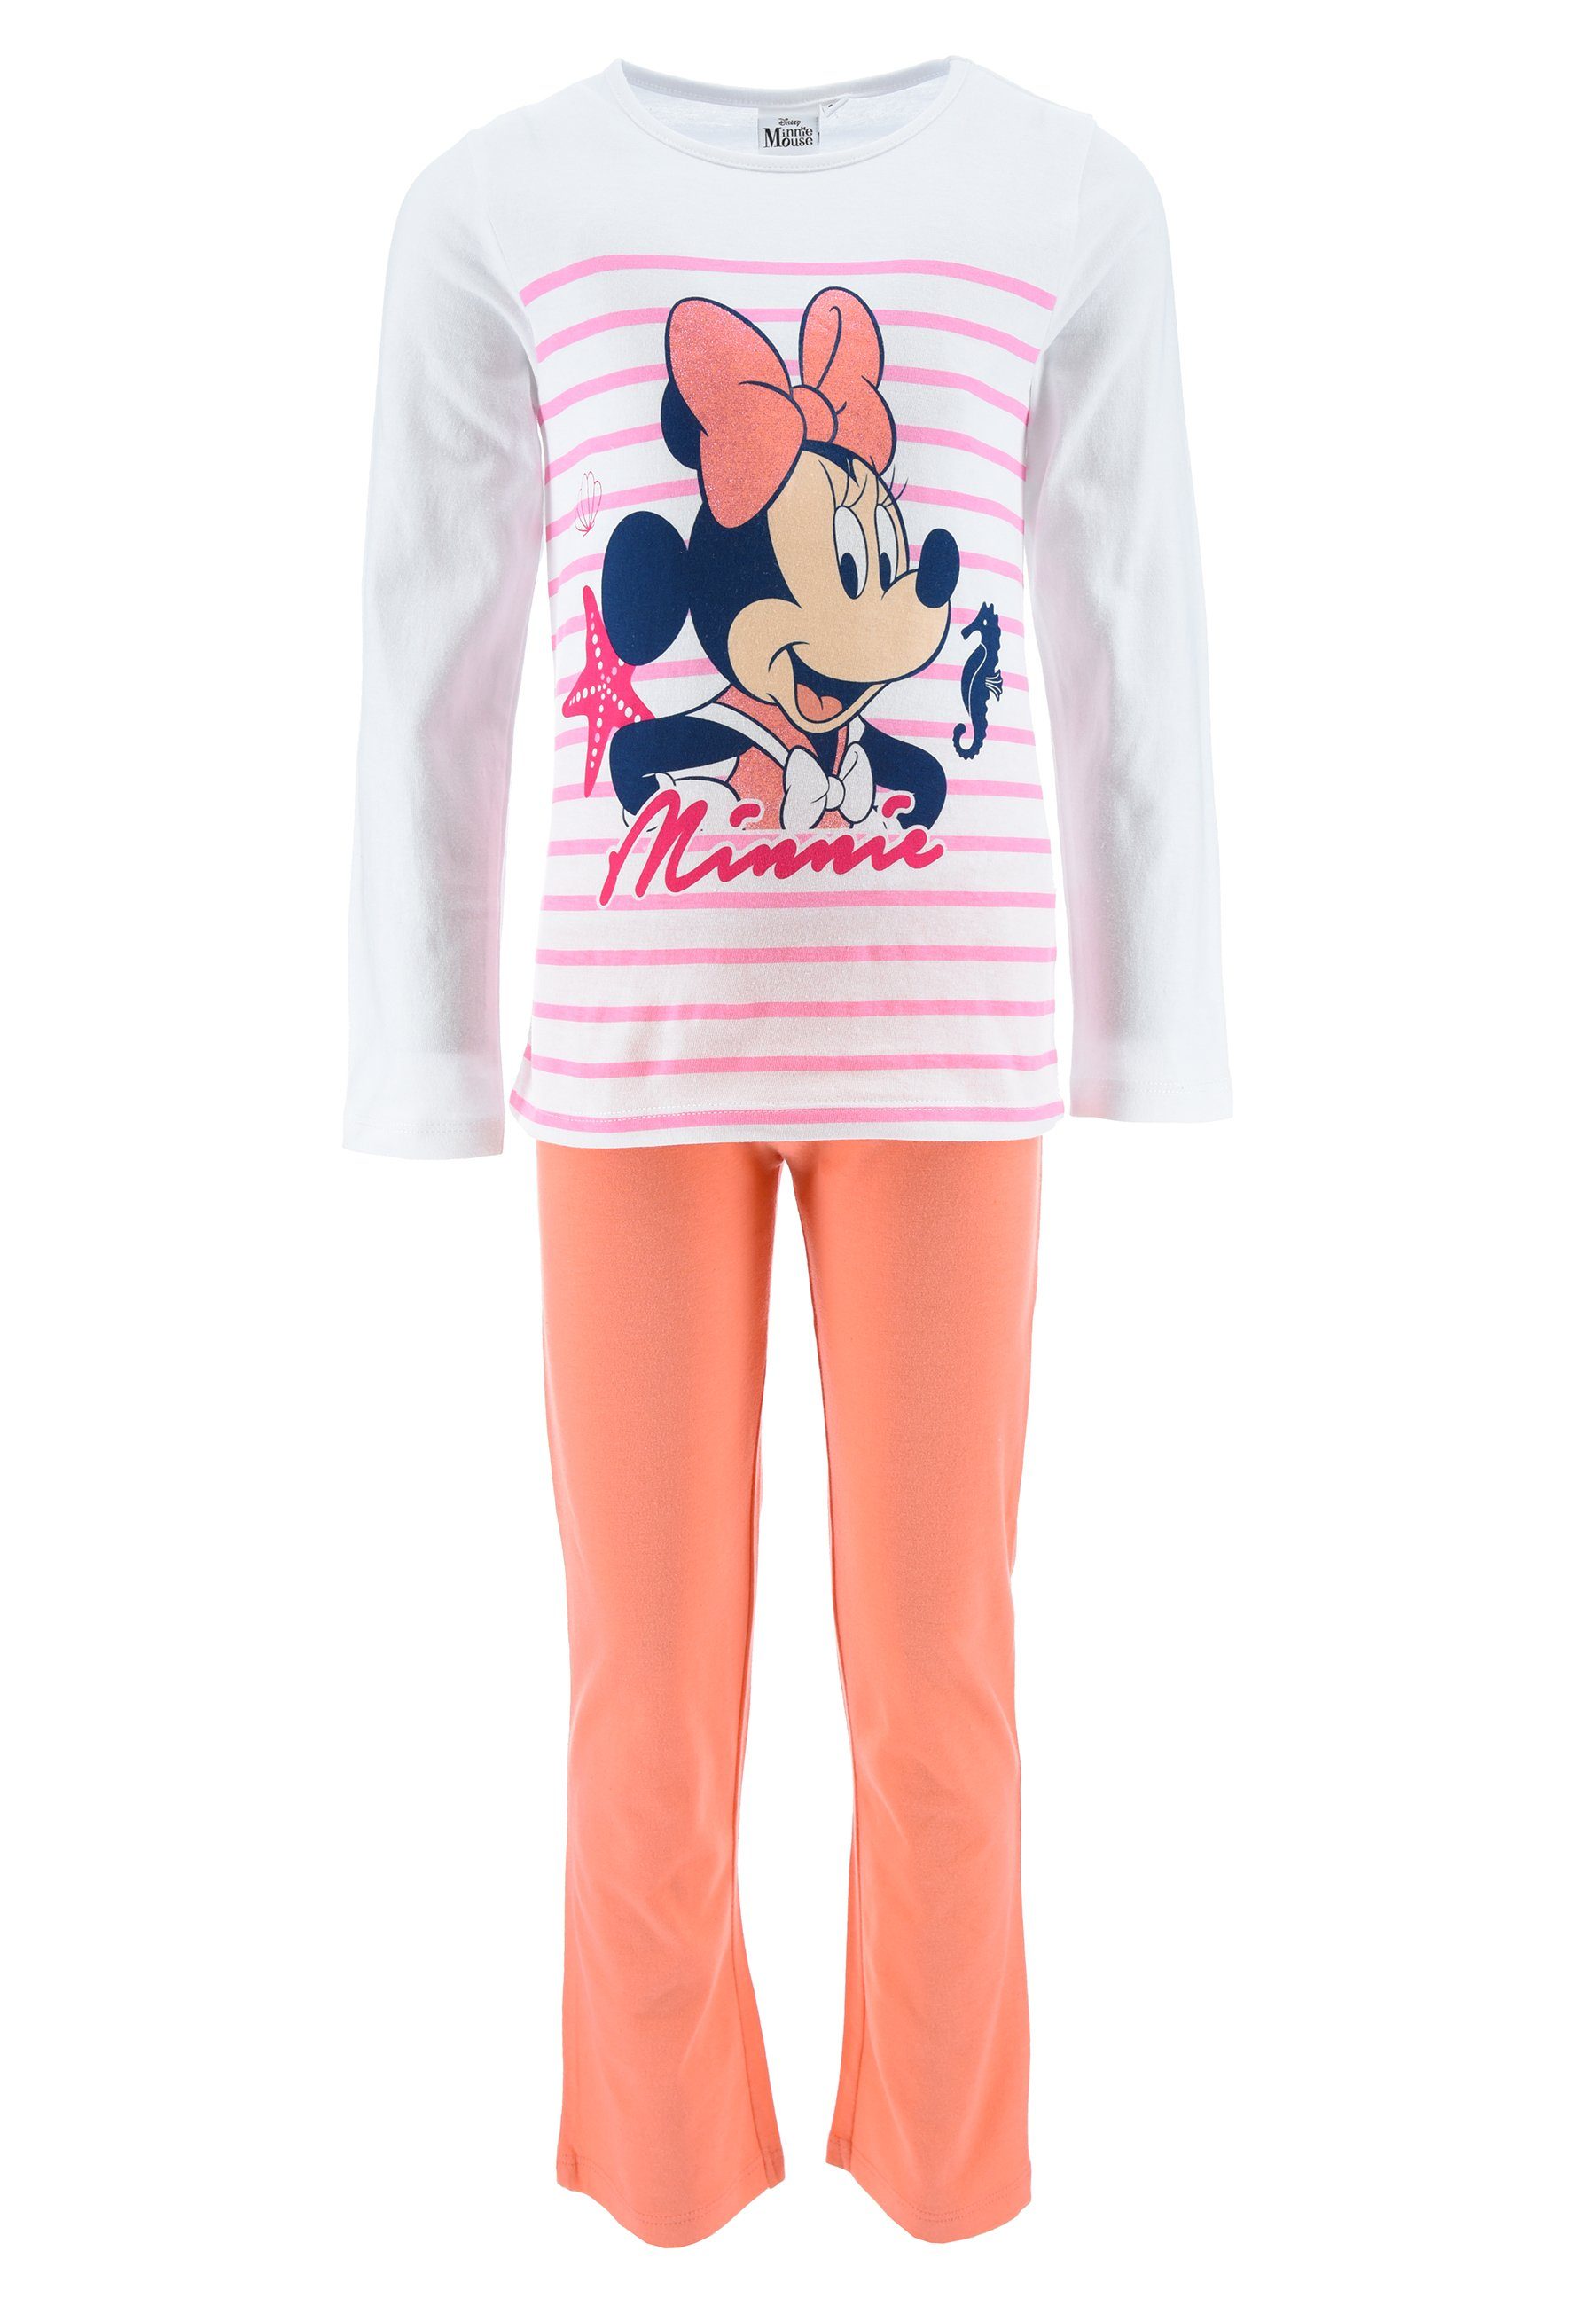 Mini Mouse + tlg) Disney Kinder Pyjama Pink Schlafanzug Mädchen Langarm Maus Schlafanzug (2 Schlaf-Hose Shirt Minnie